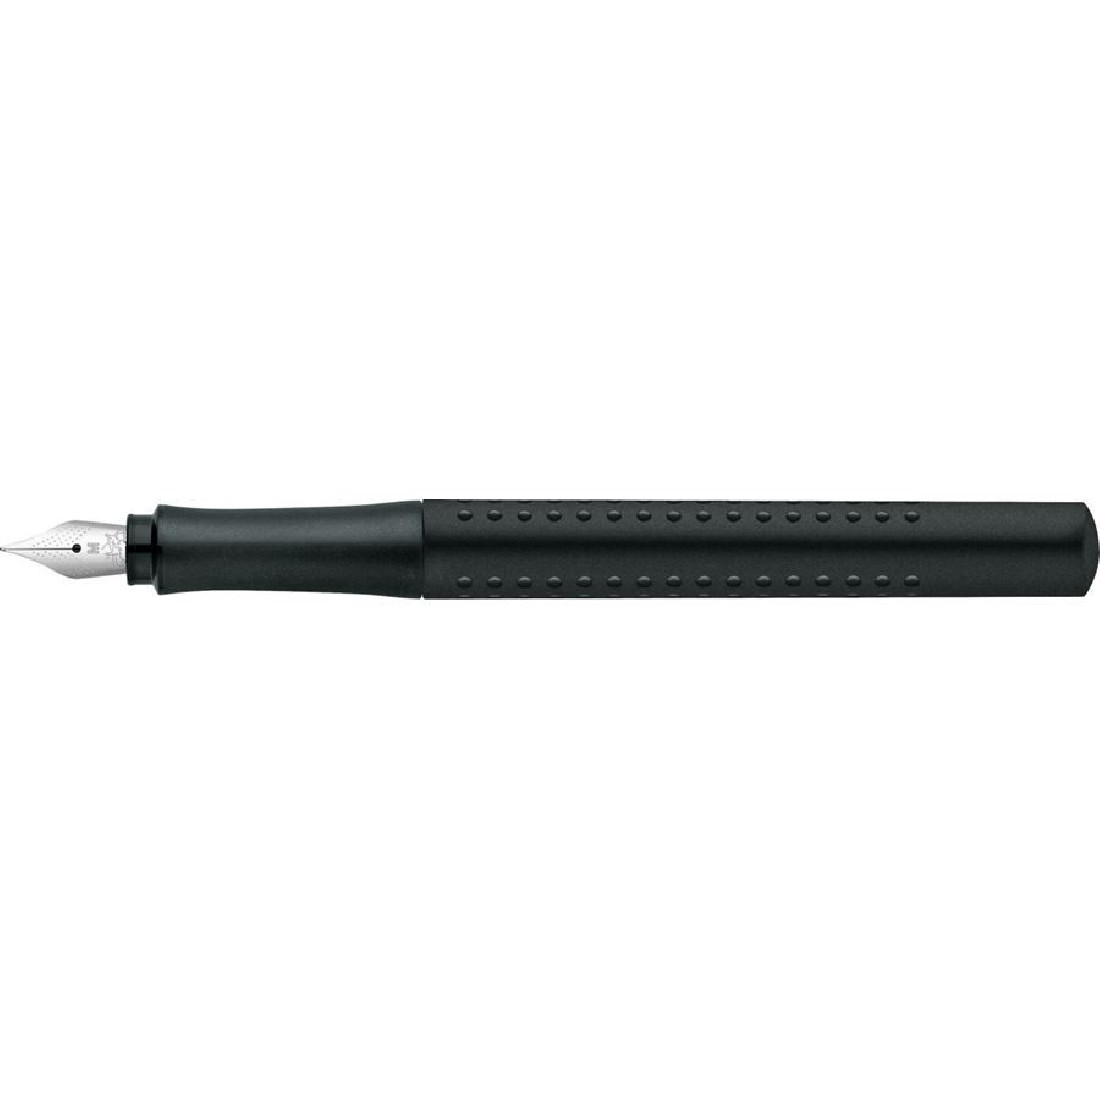 Faber Castell Fountain pen Grip 2011 black 140901